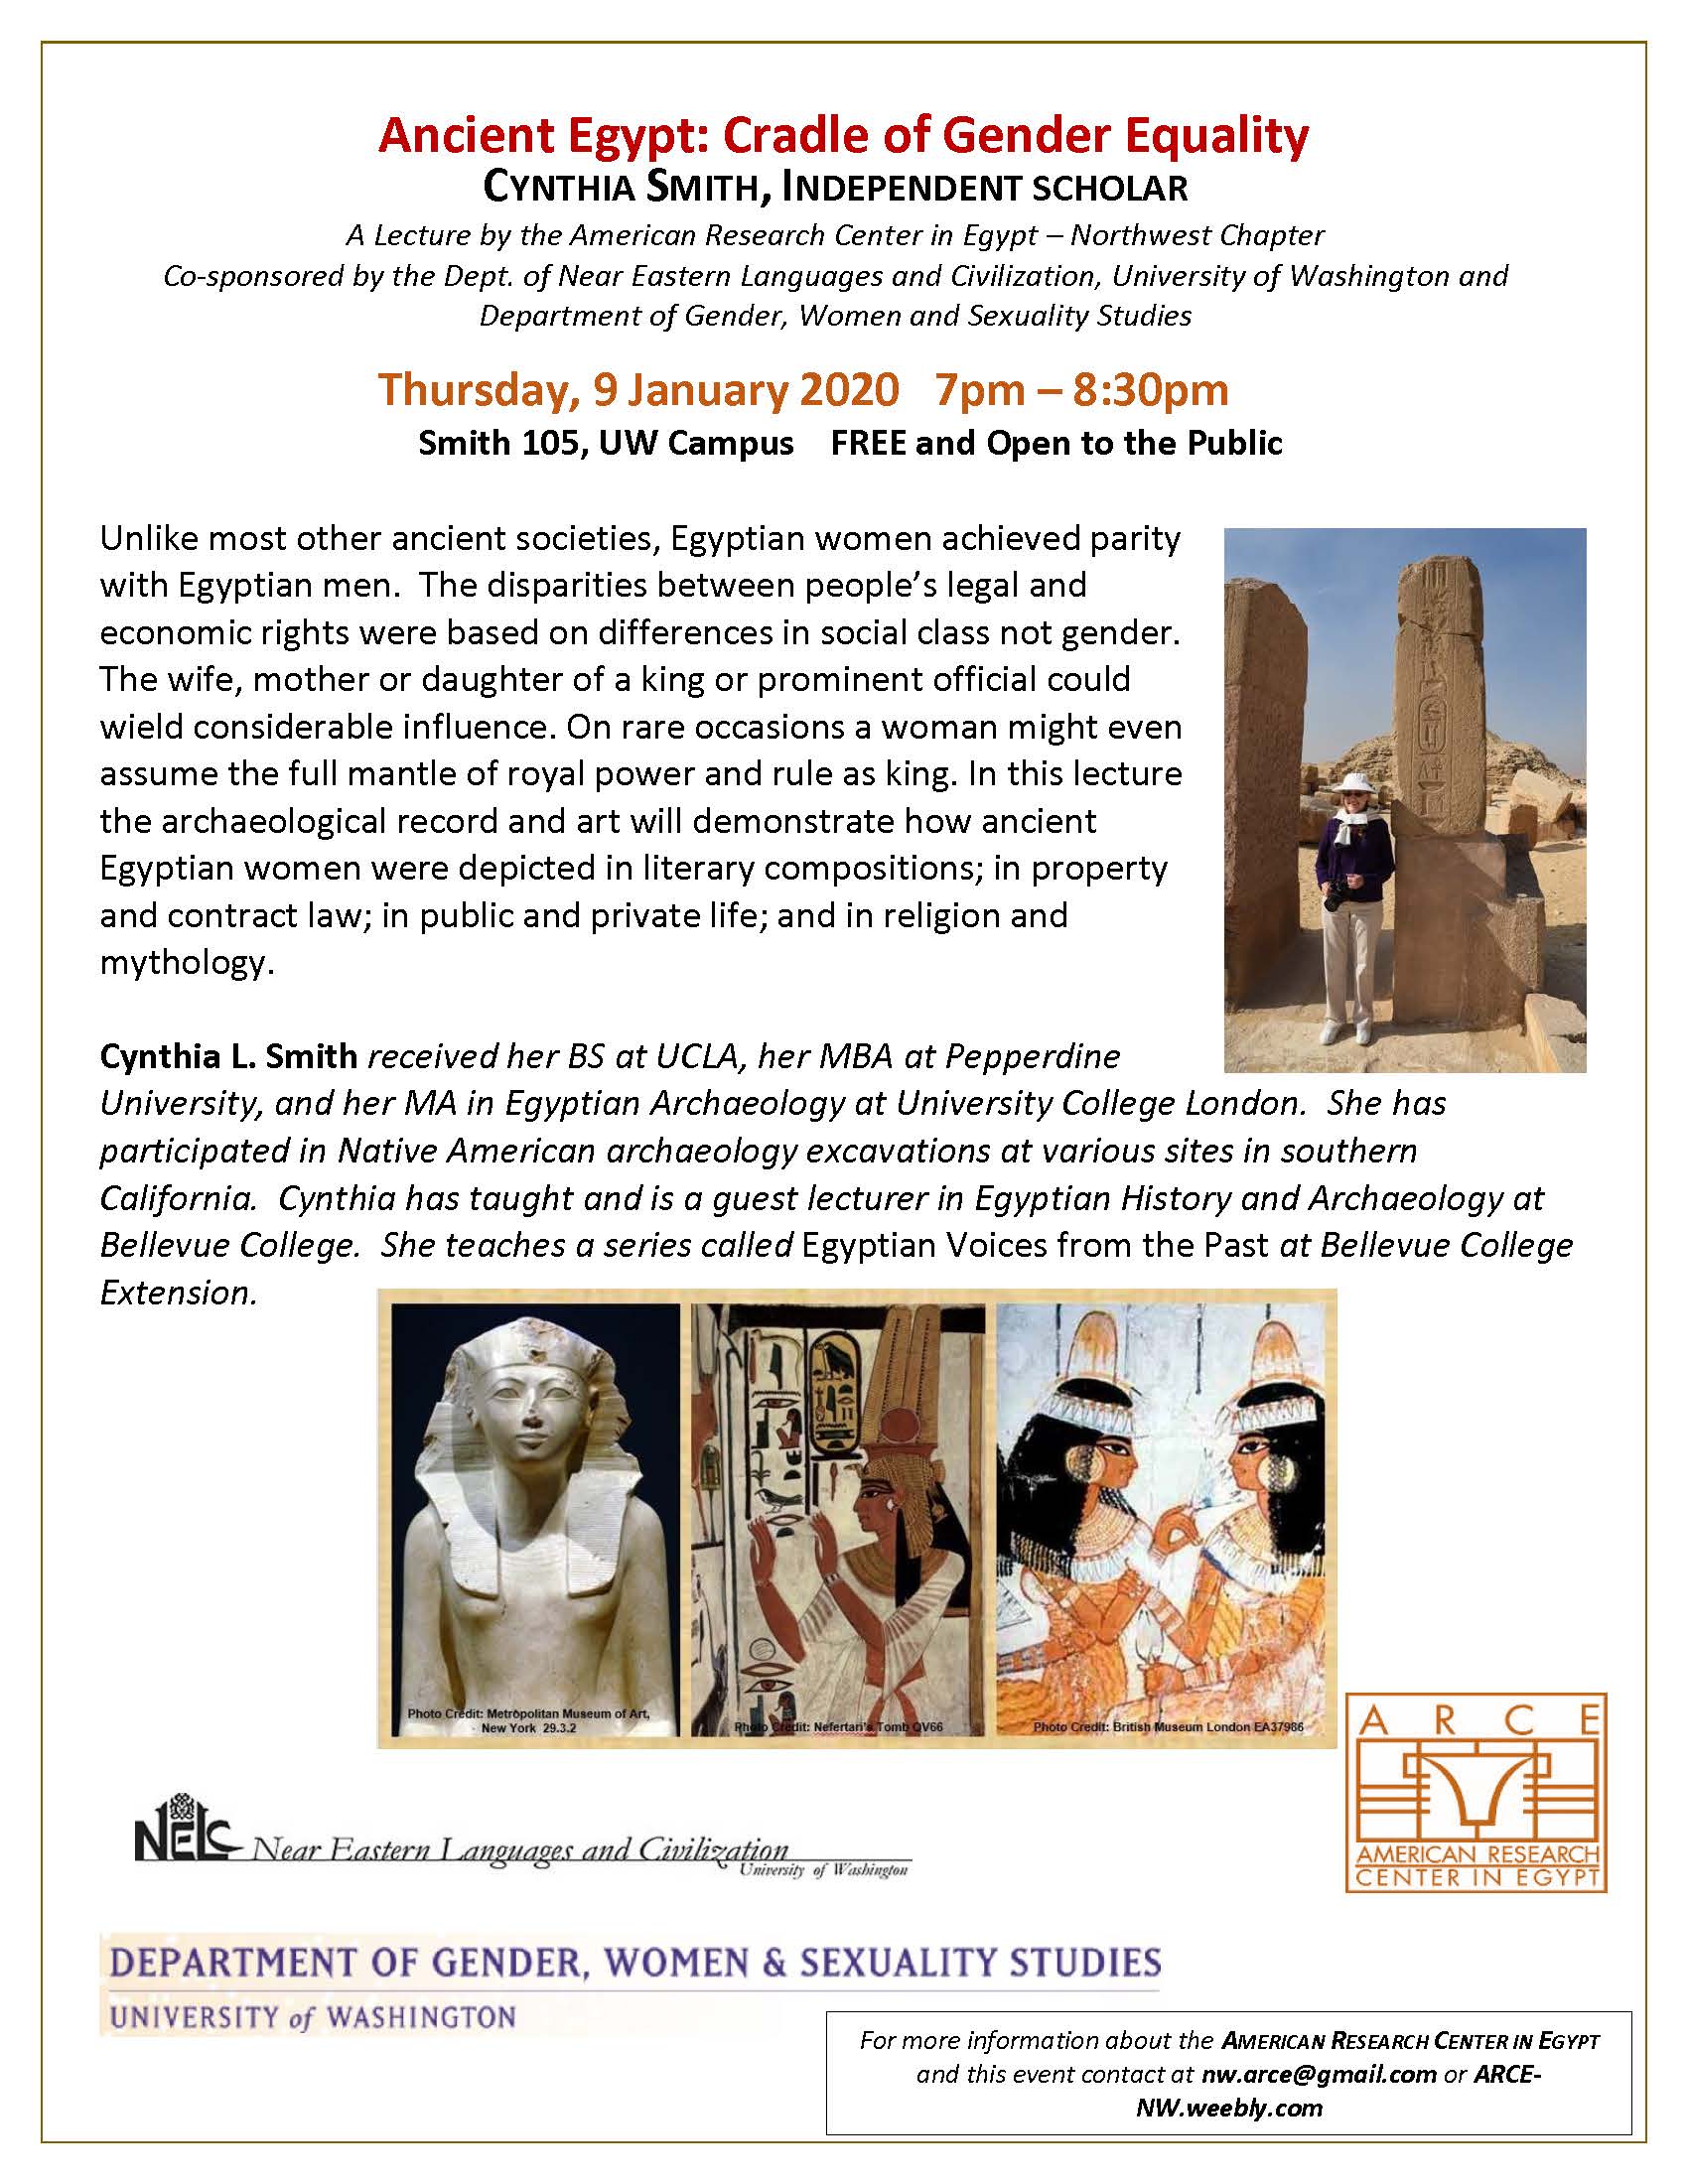 Ancient Egypt: Cradle Gender Equality ARCE